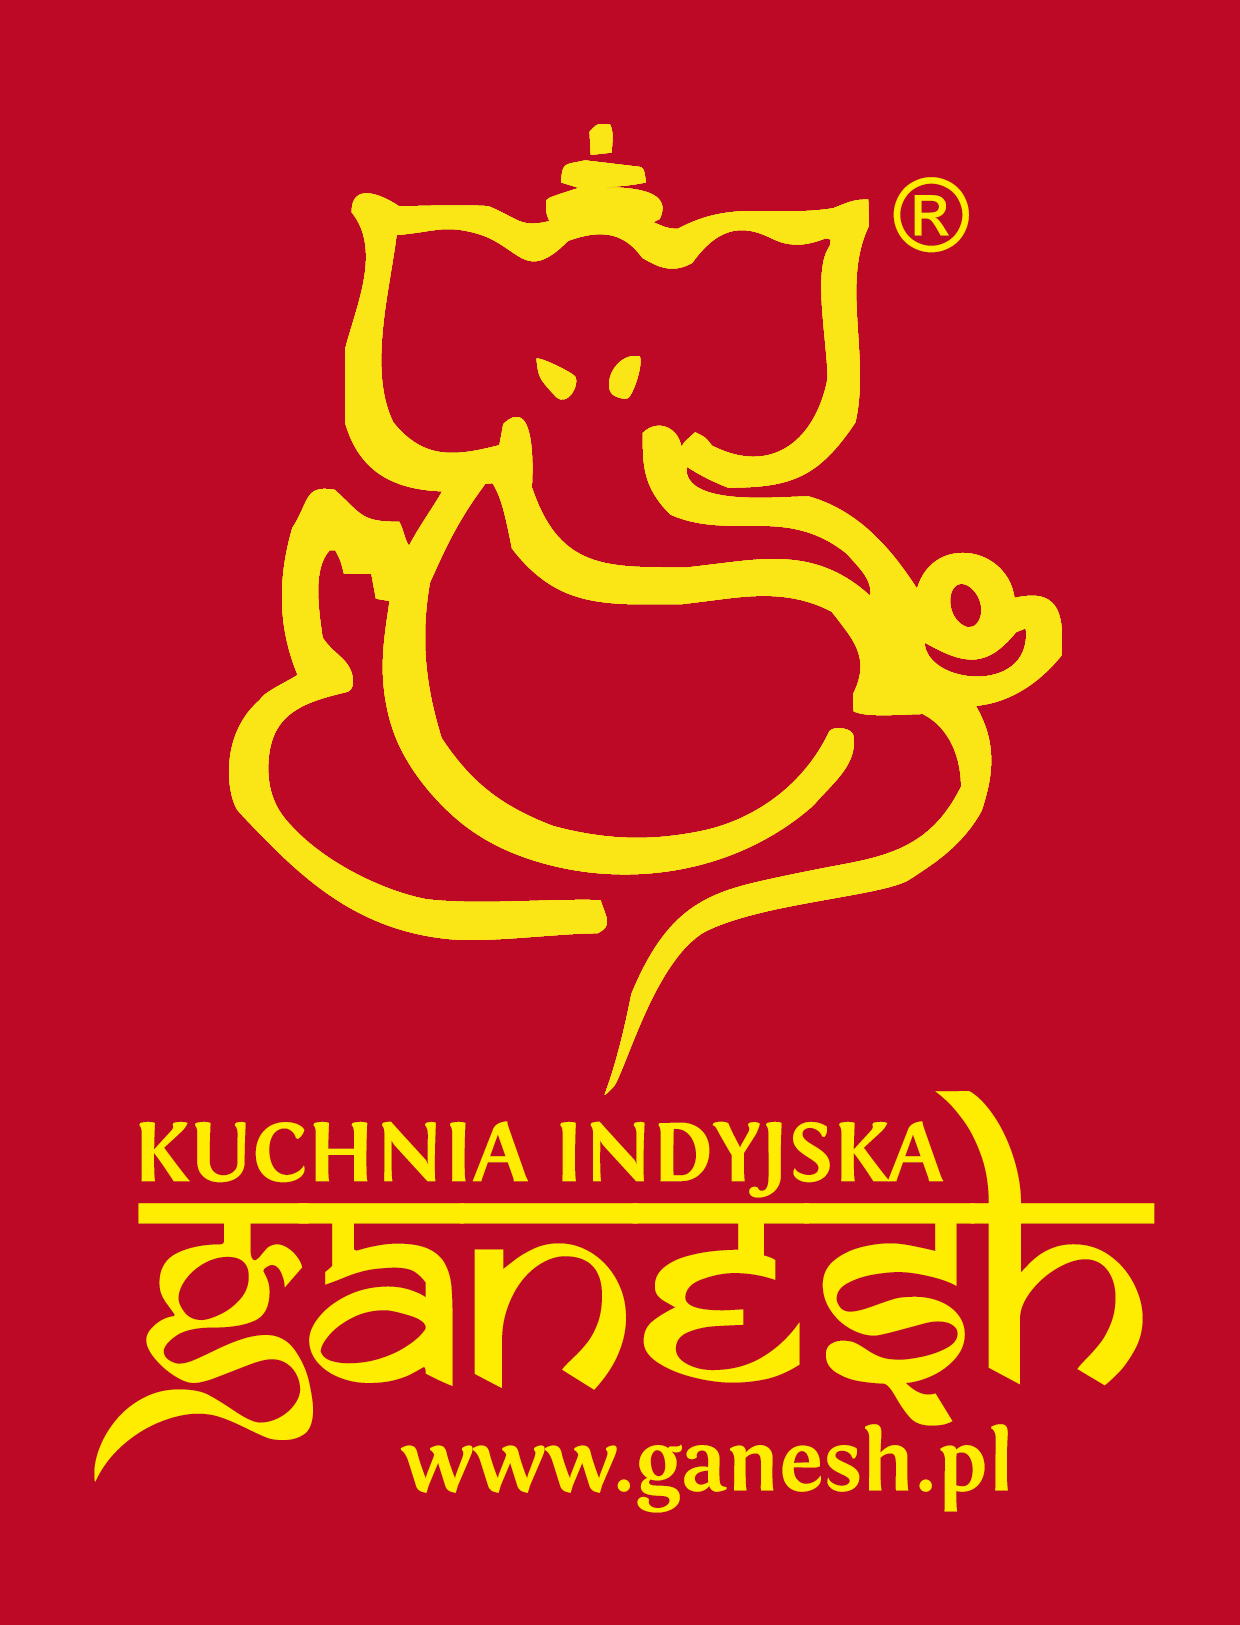 pl-ganesh-logo-pion-kolor copy